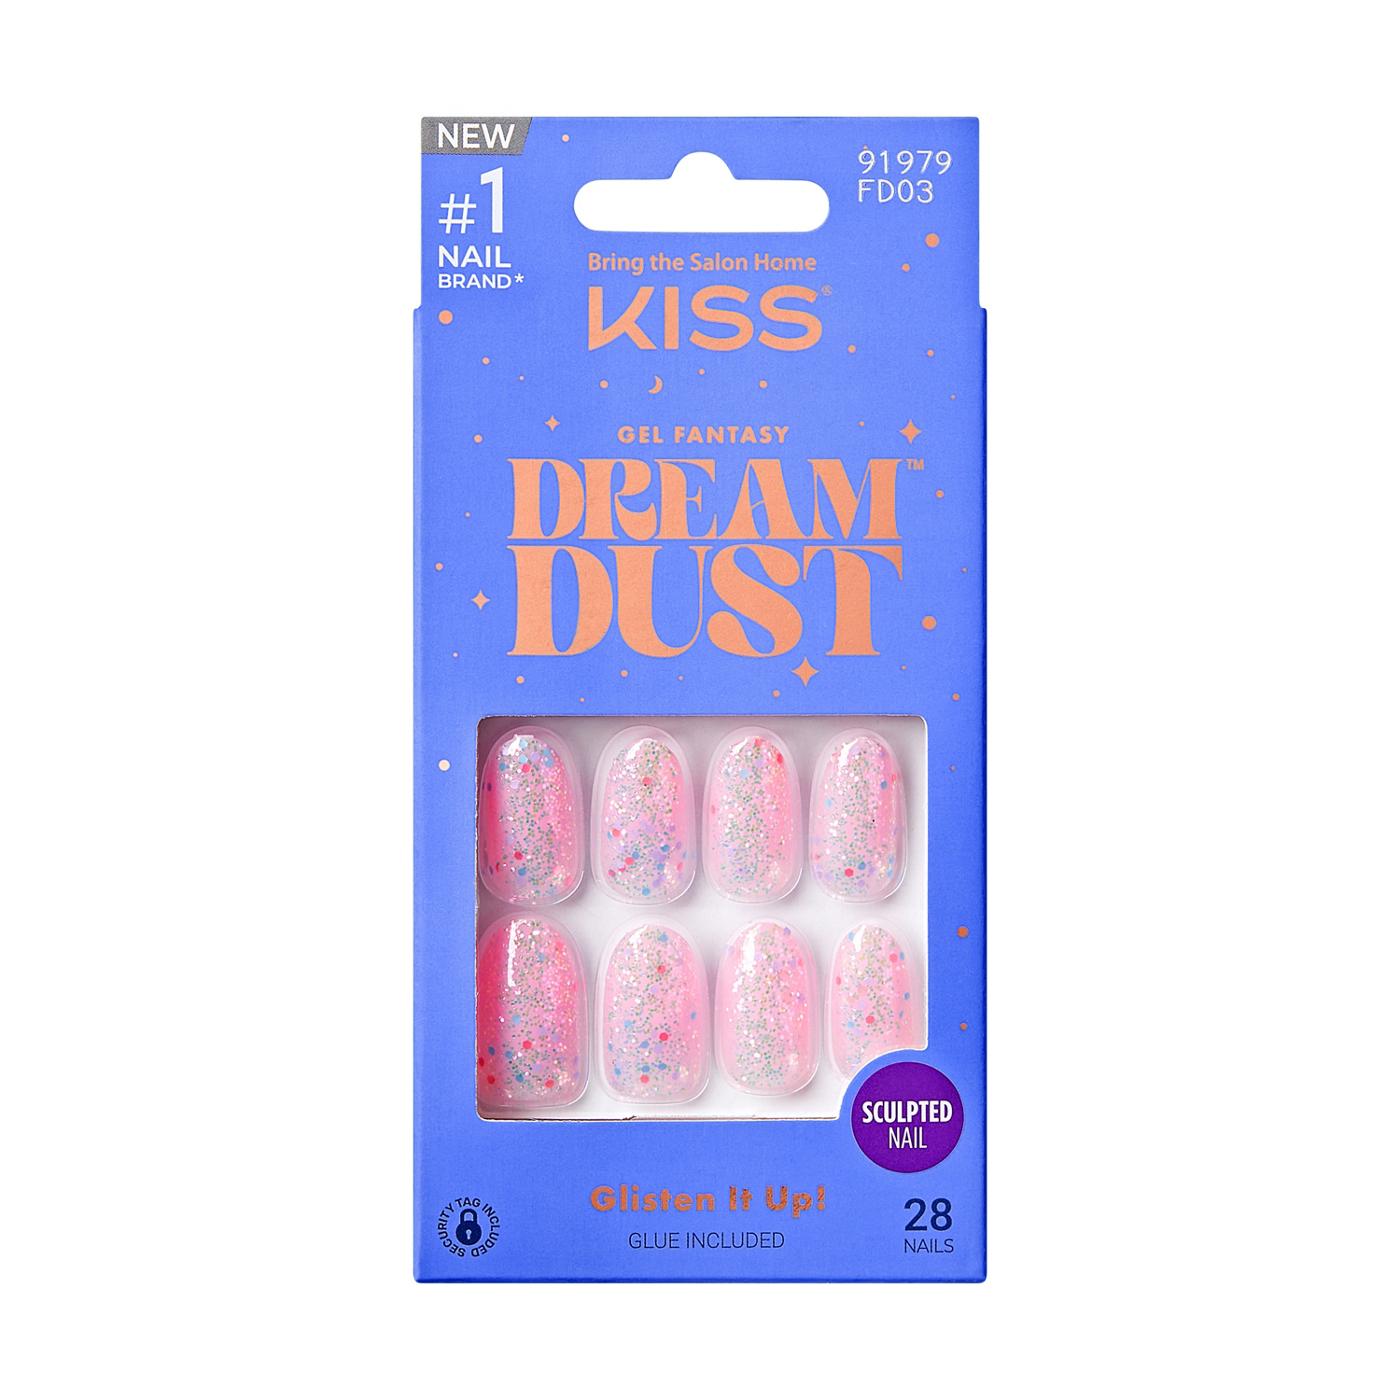 KISS Gel Fantasy Dream Dust Nails - Diamonds 4 Me; image 1 of 6